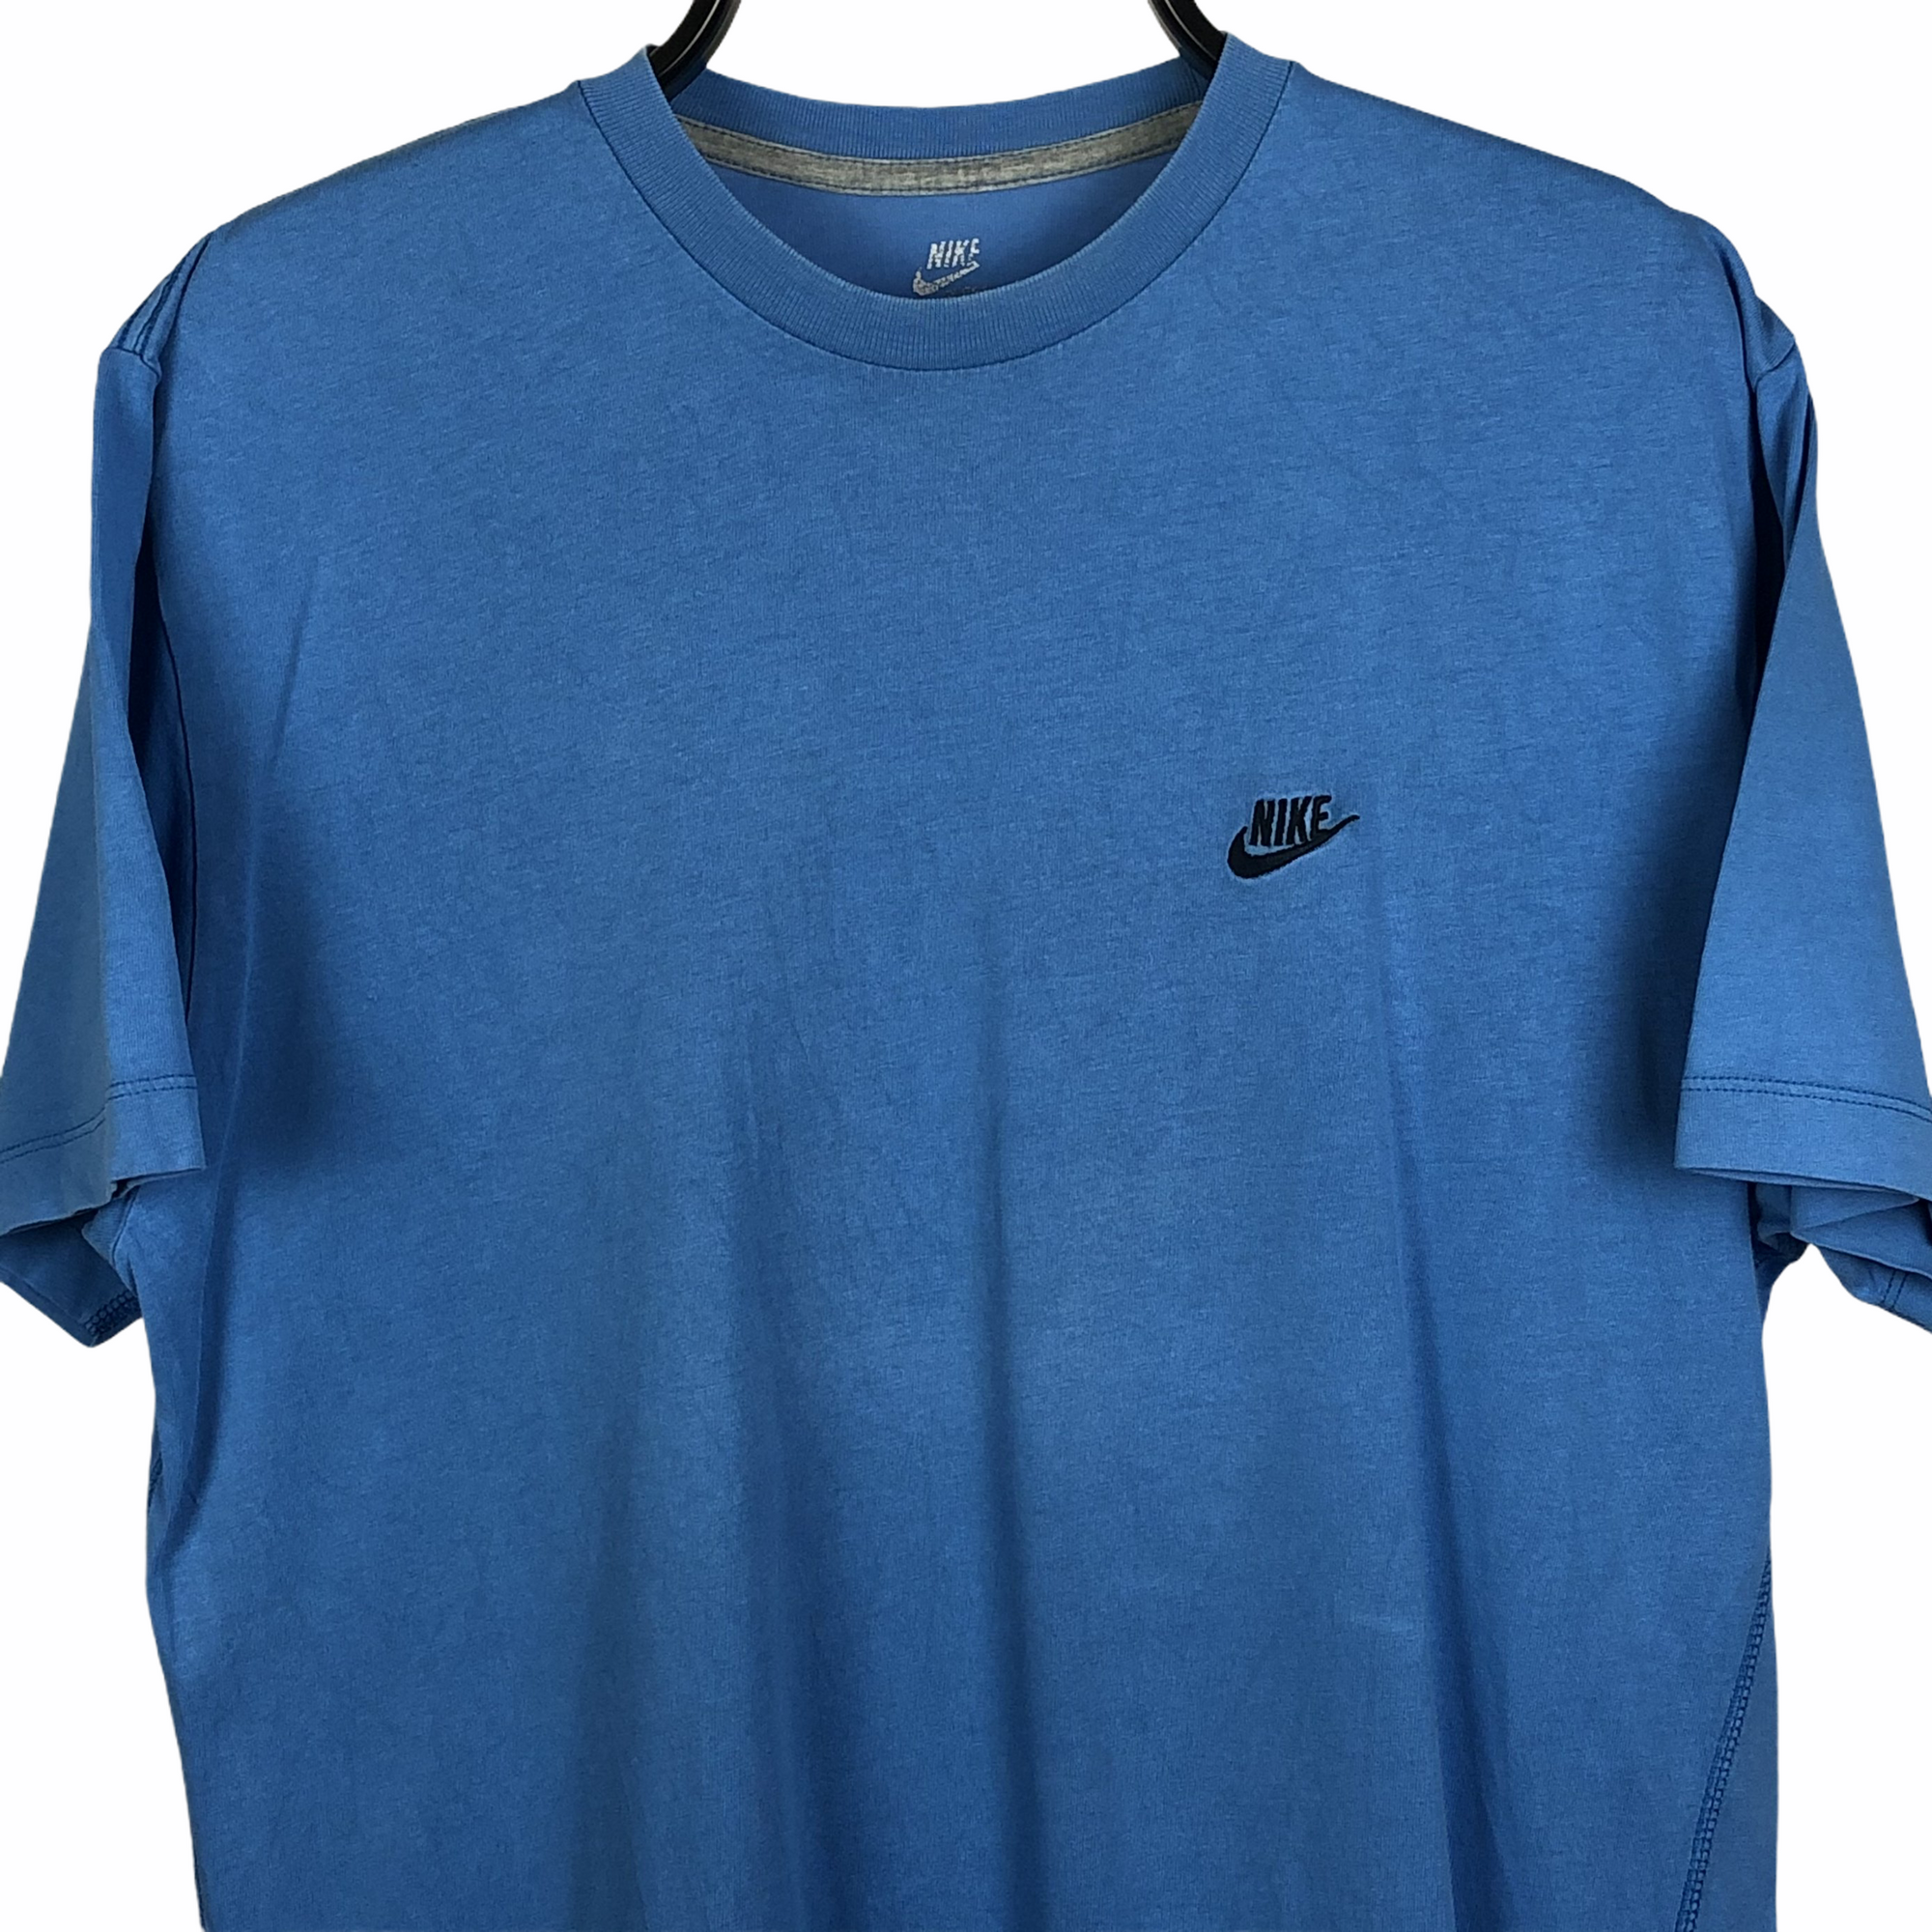 Nike Embroidered Logo Tee in Baby Blue - Men's Medium/Women's Large